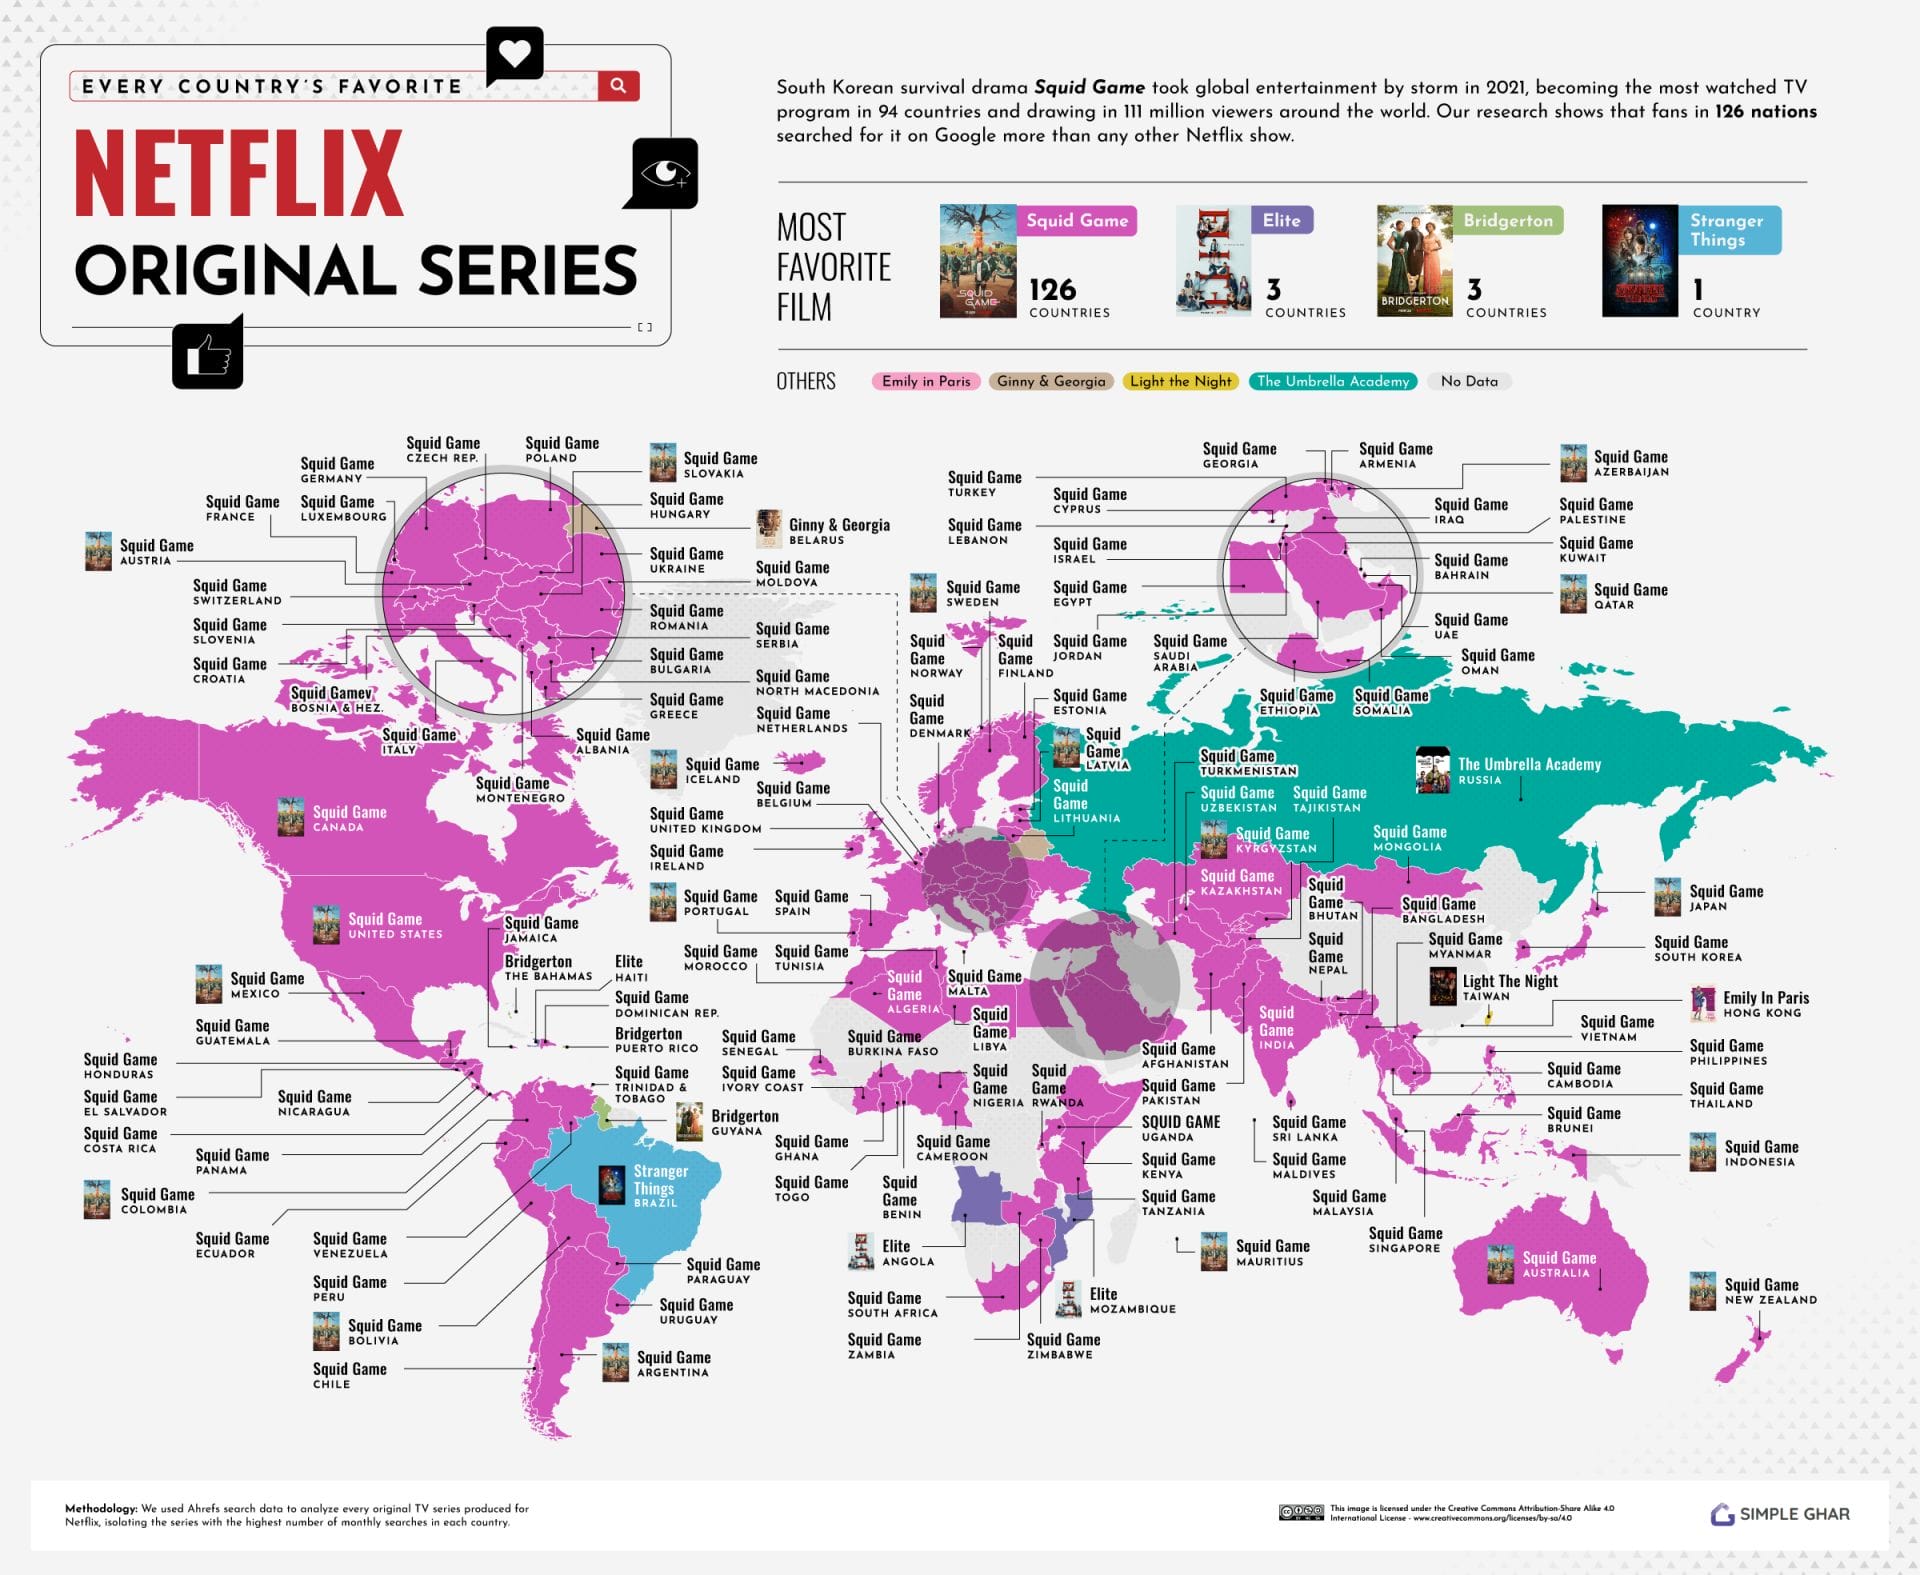 The most popular Netflix original shows around the world